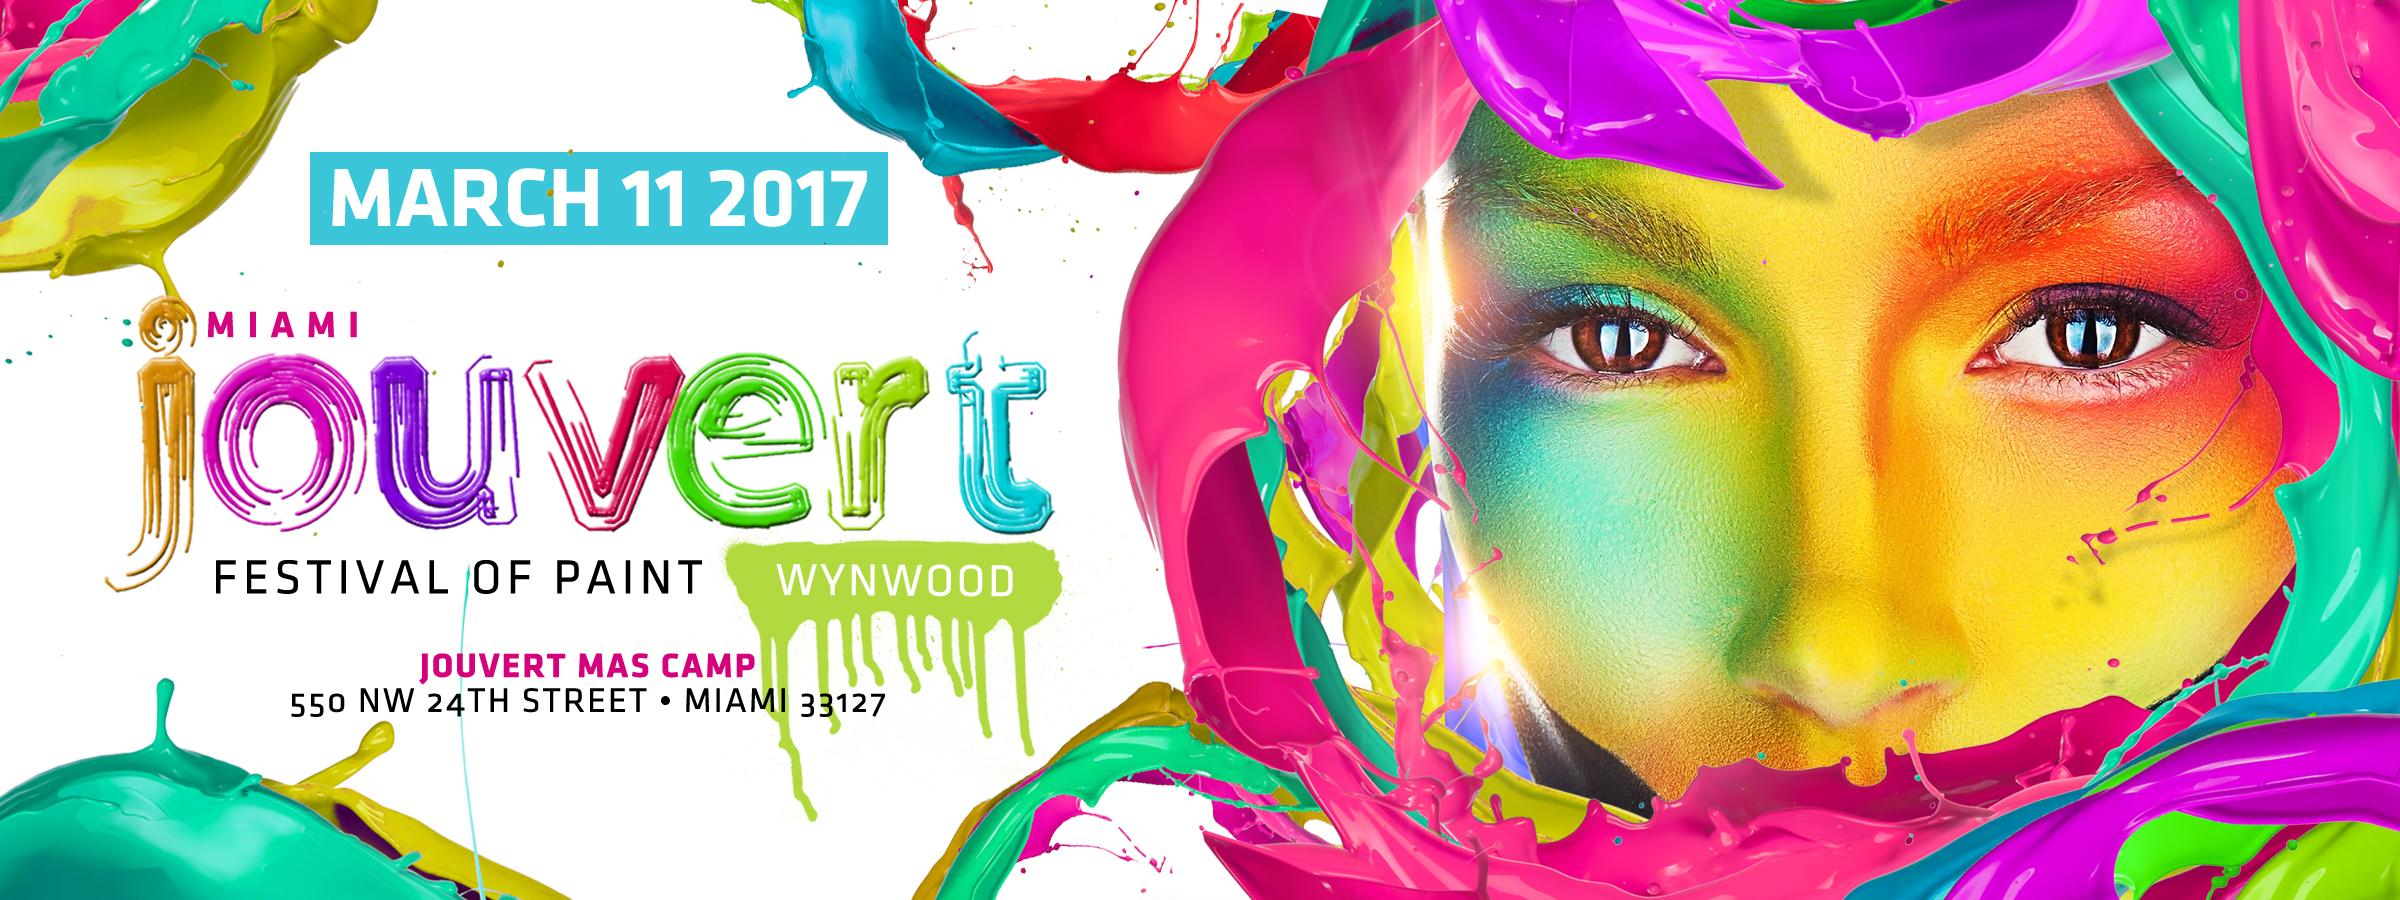 Miami Jouvert Wynwood Festival of Paint! #MiamiJouvert